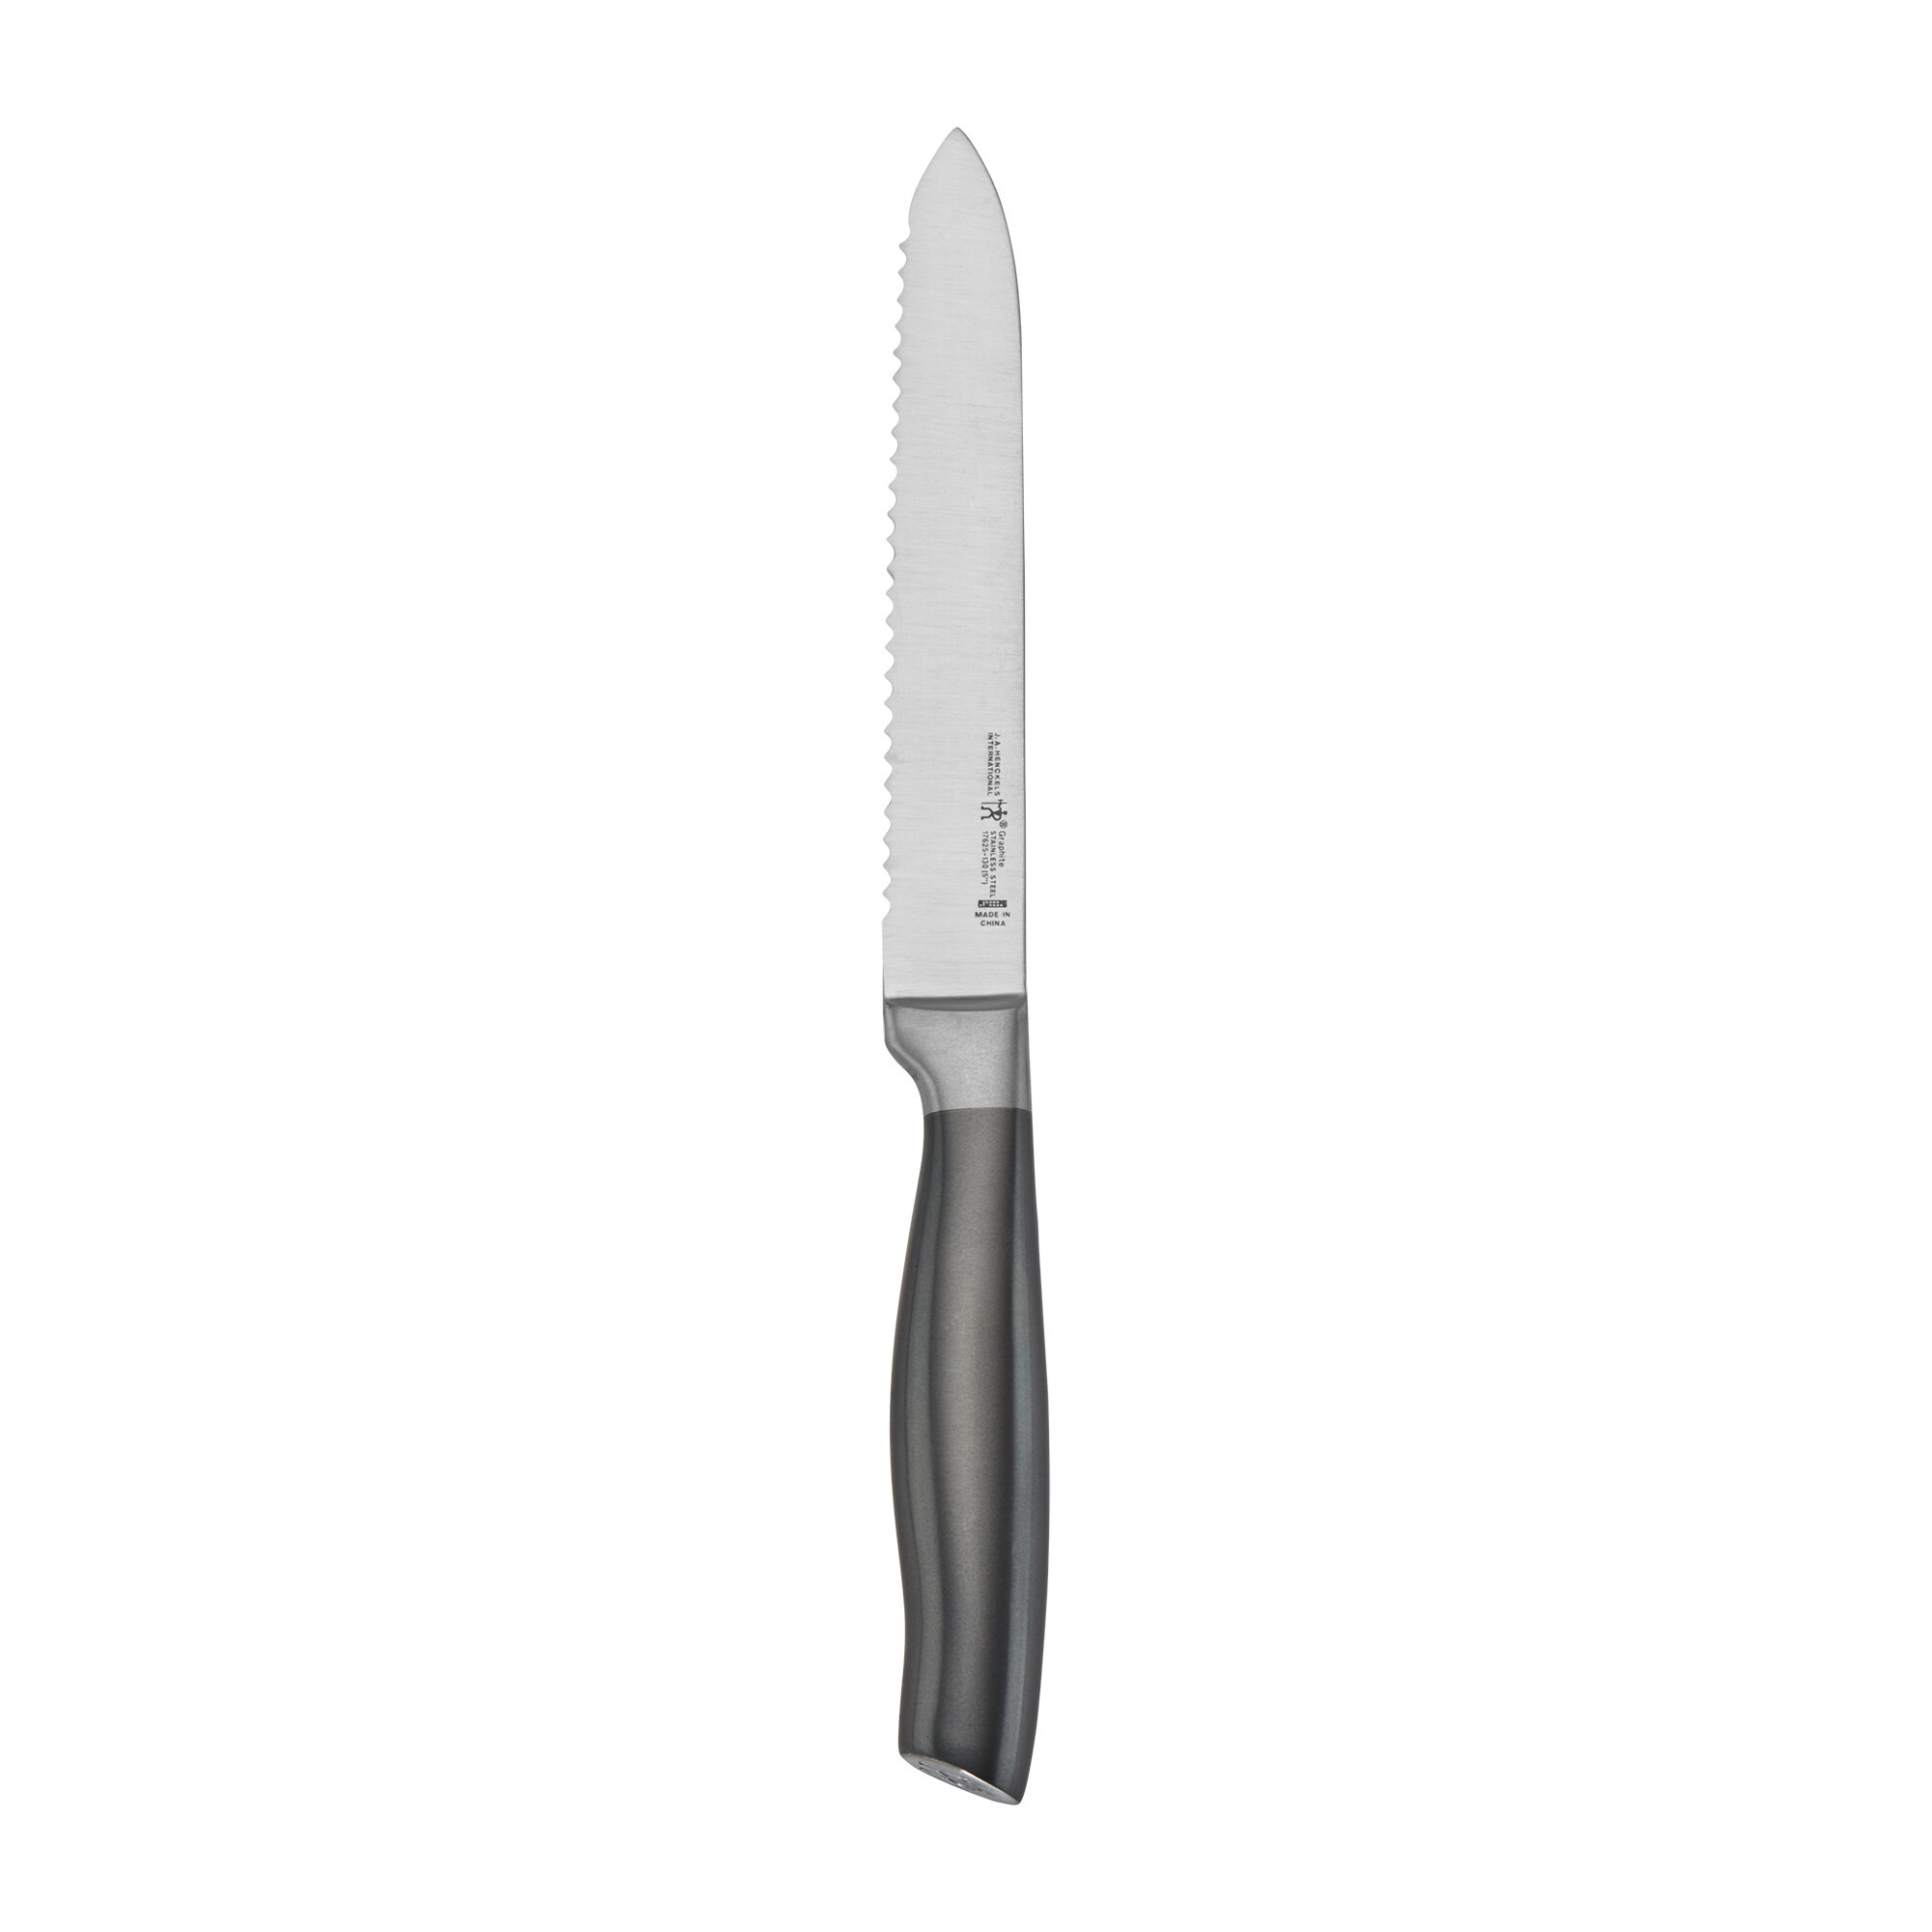 Henckels Graphite 5.5-Inch, Boning Knife